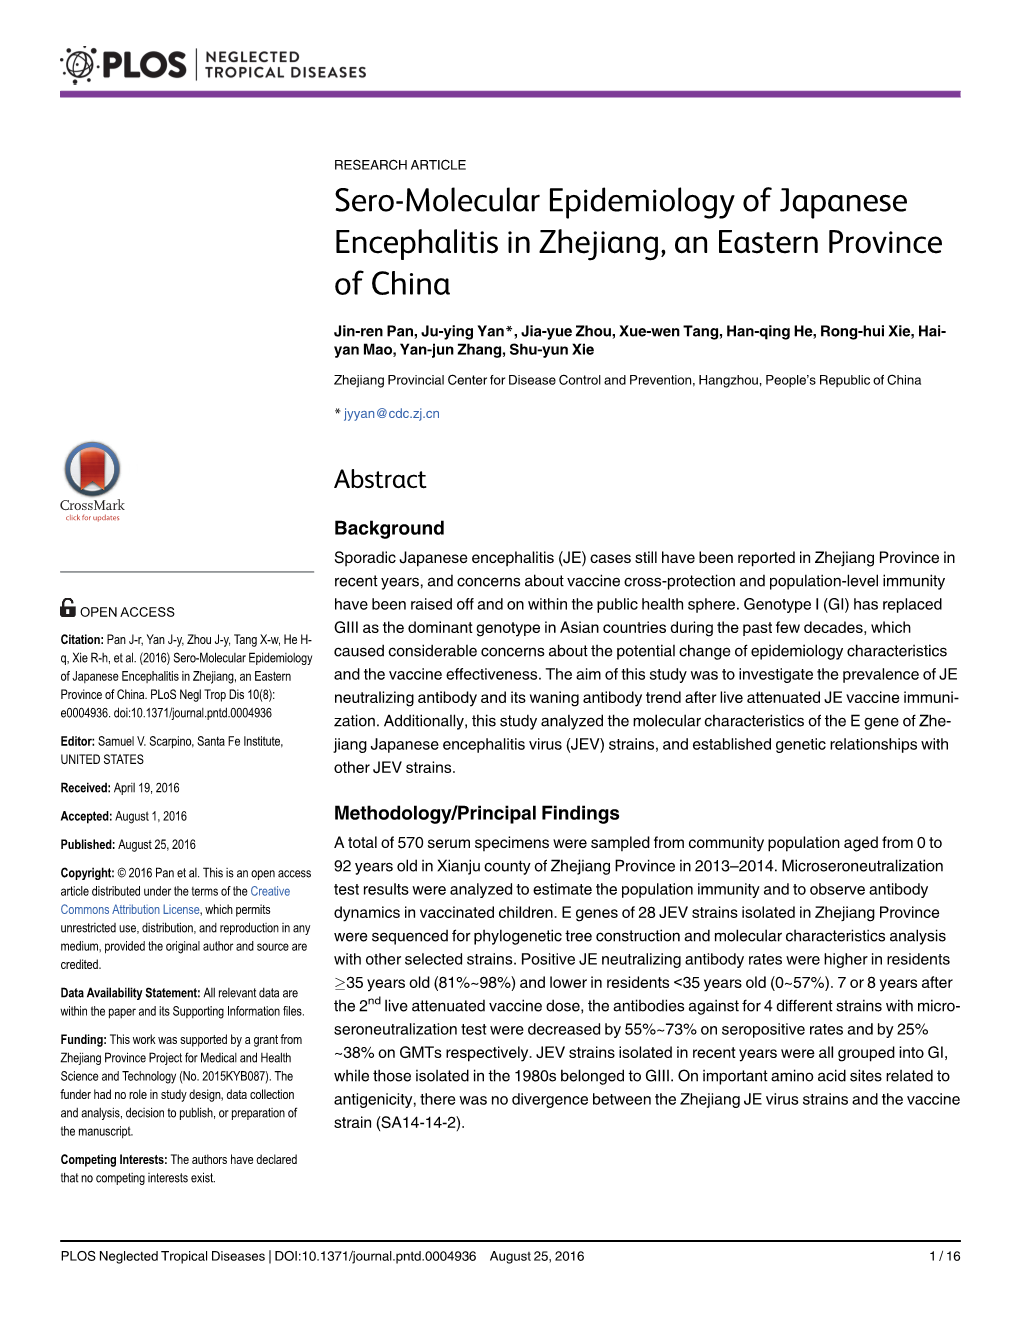 Sero-Molecular Epidemiology of Japanese Encephalitis in Zhejiang, an Eastern Province of China